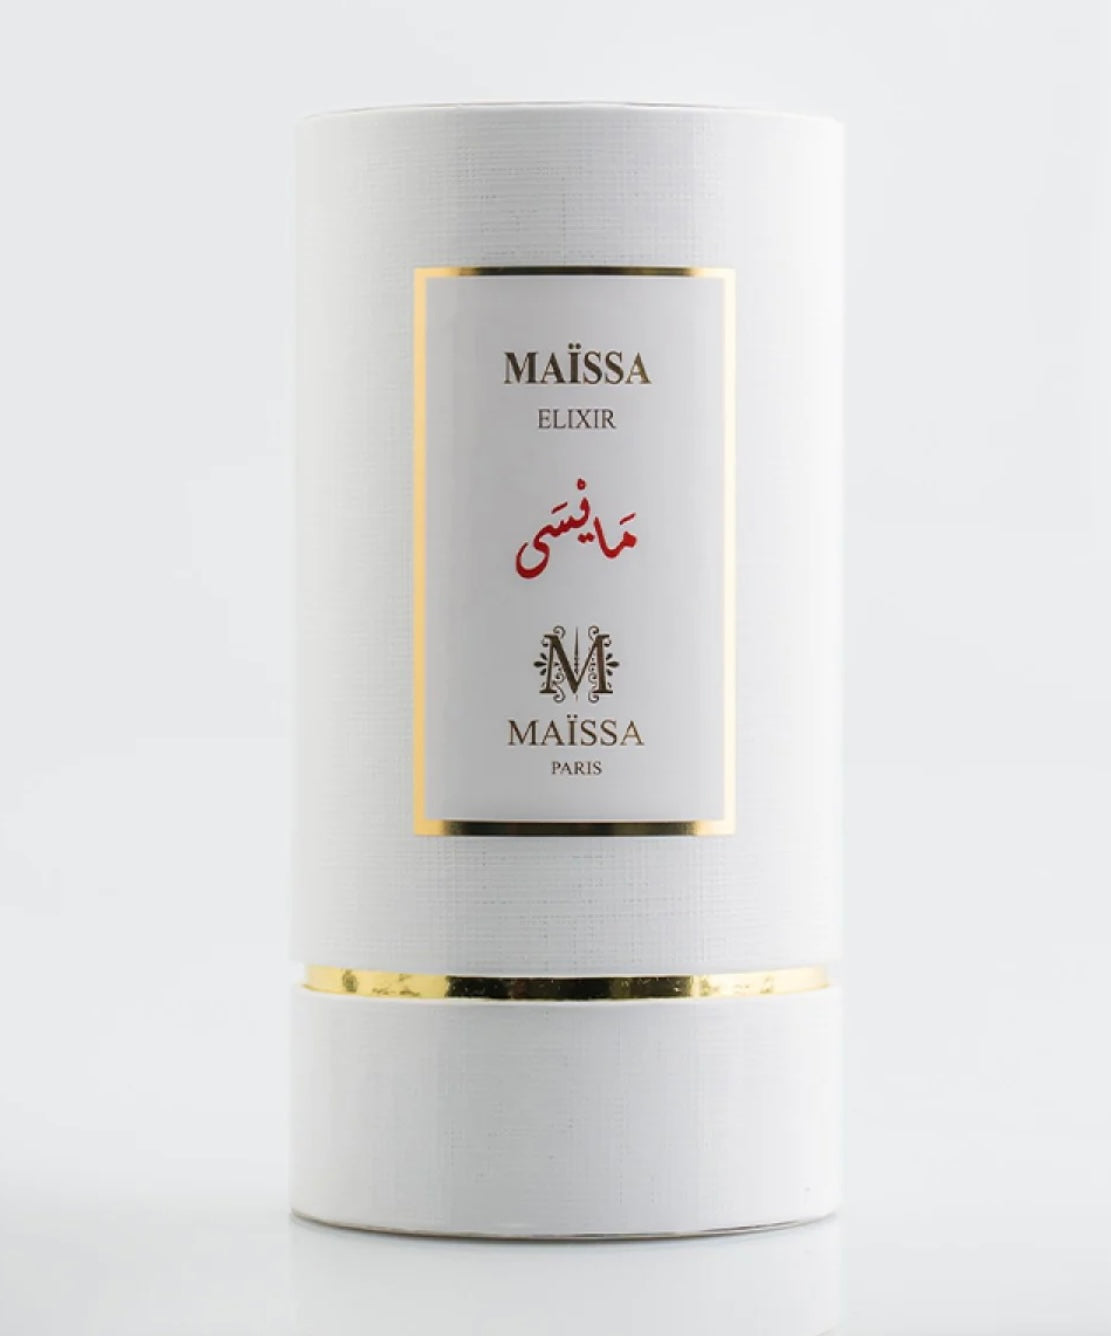 Maissa by Maissa Paris luxury fragrance 50ml